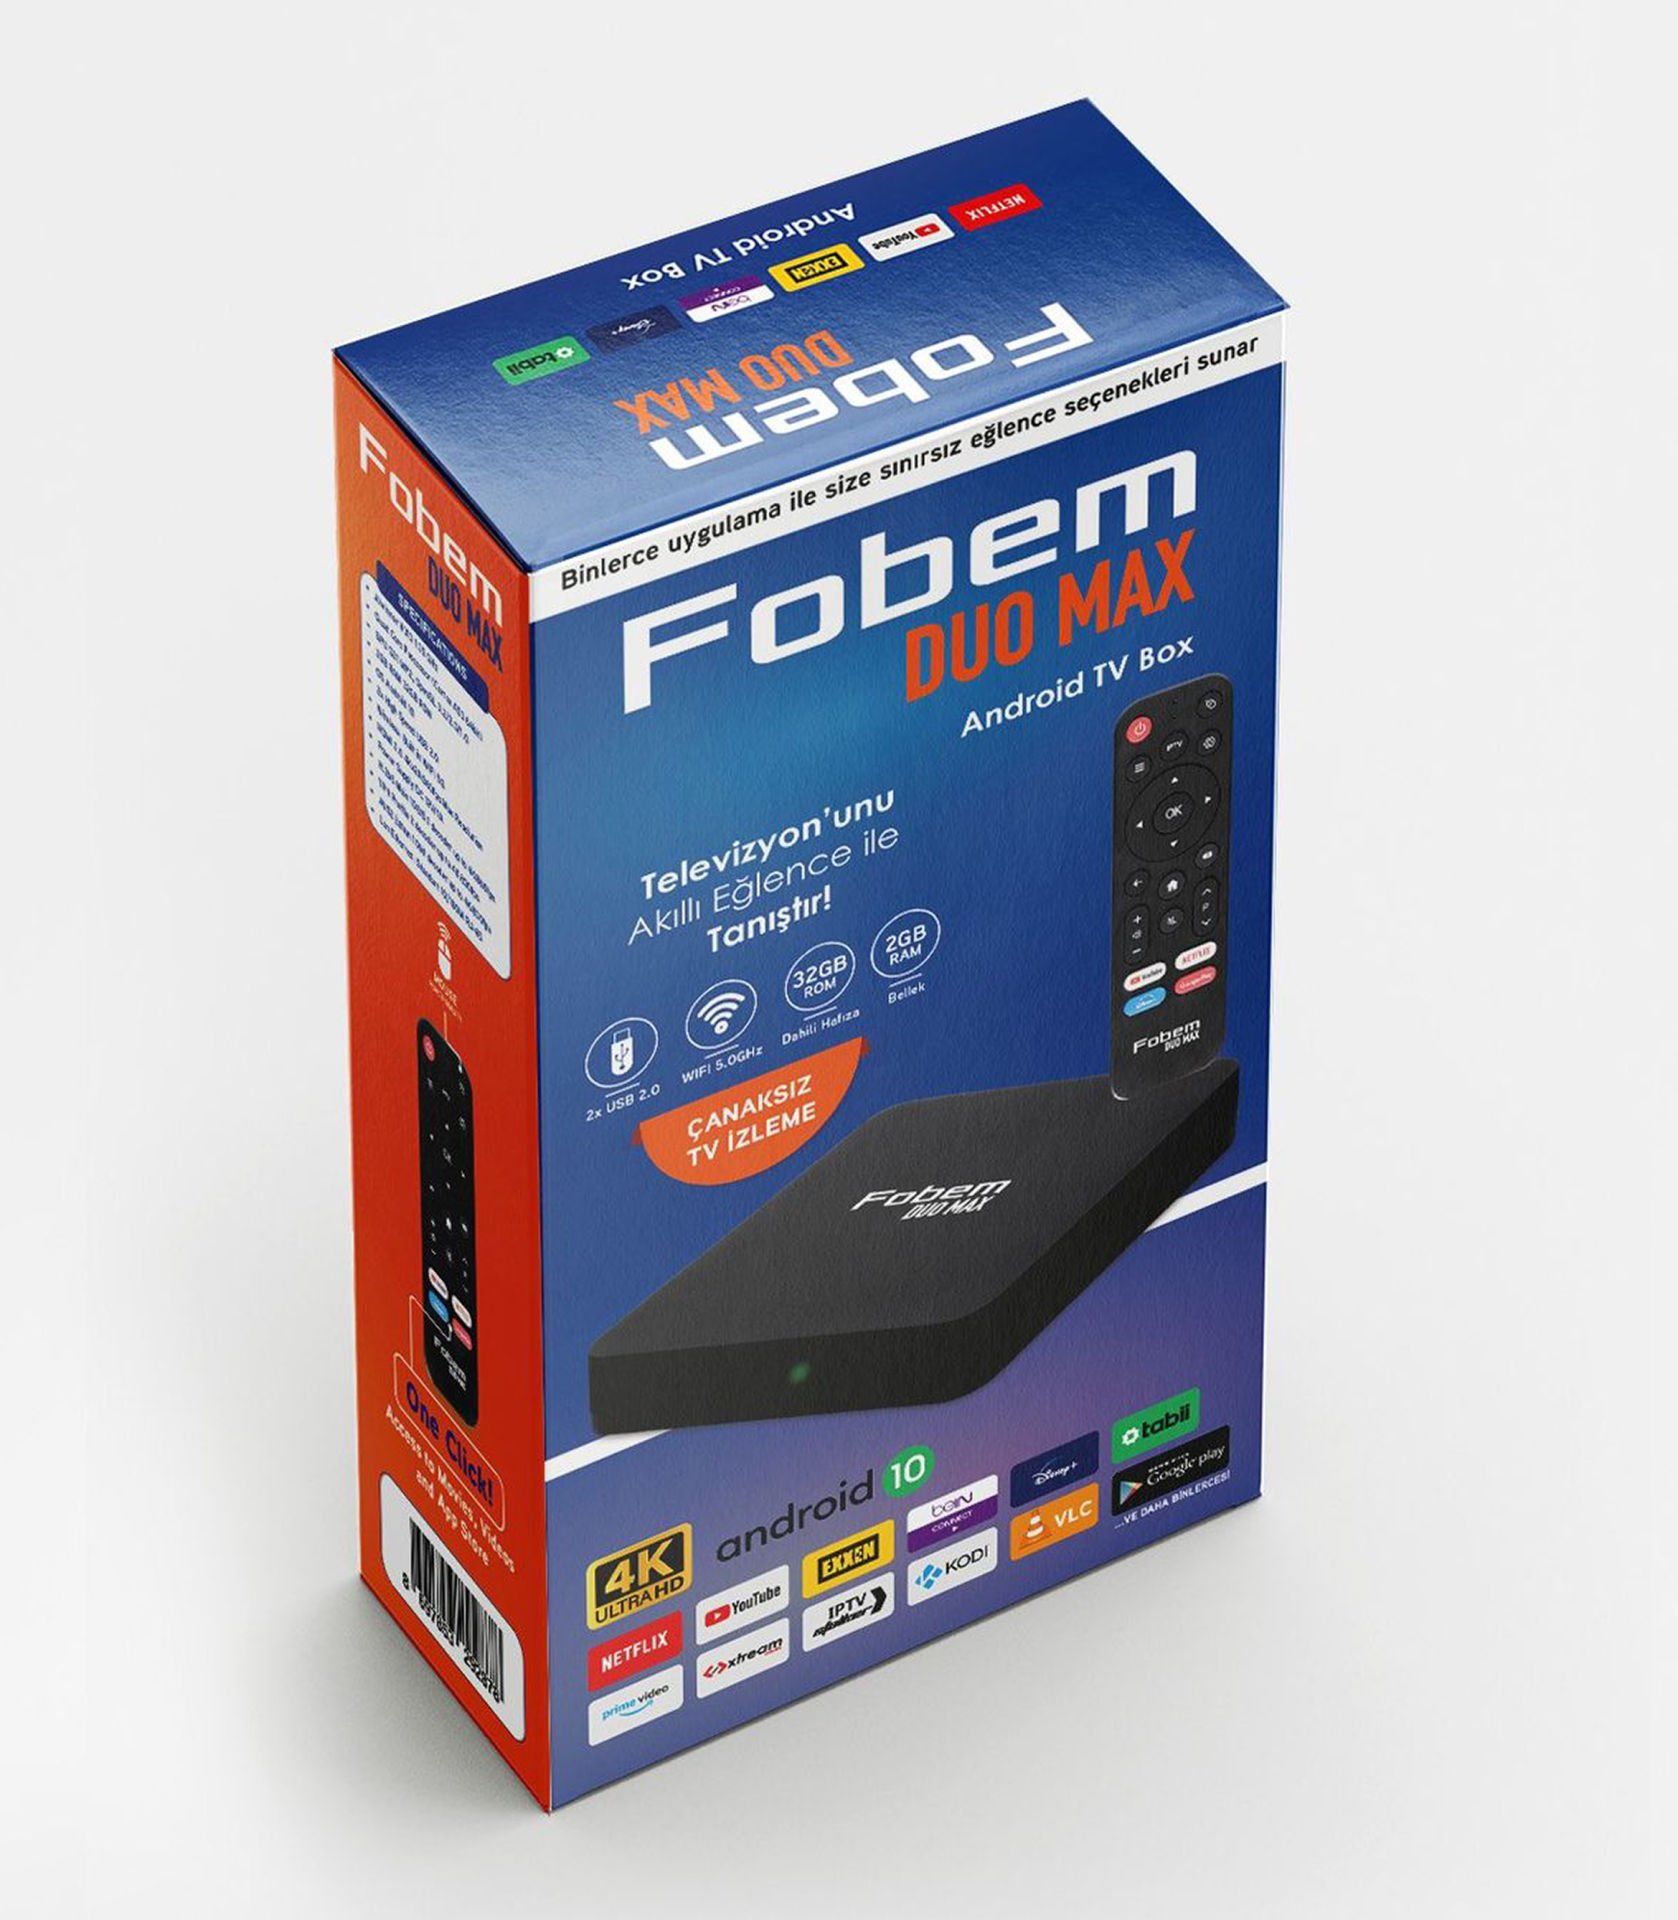 FOBEM DUO MAX 2GB/32GB ANDROİD BOX